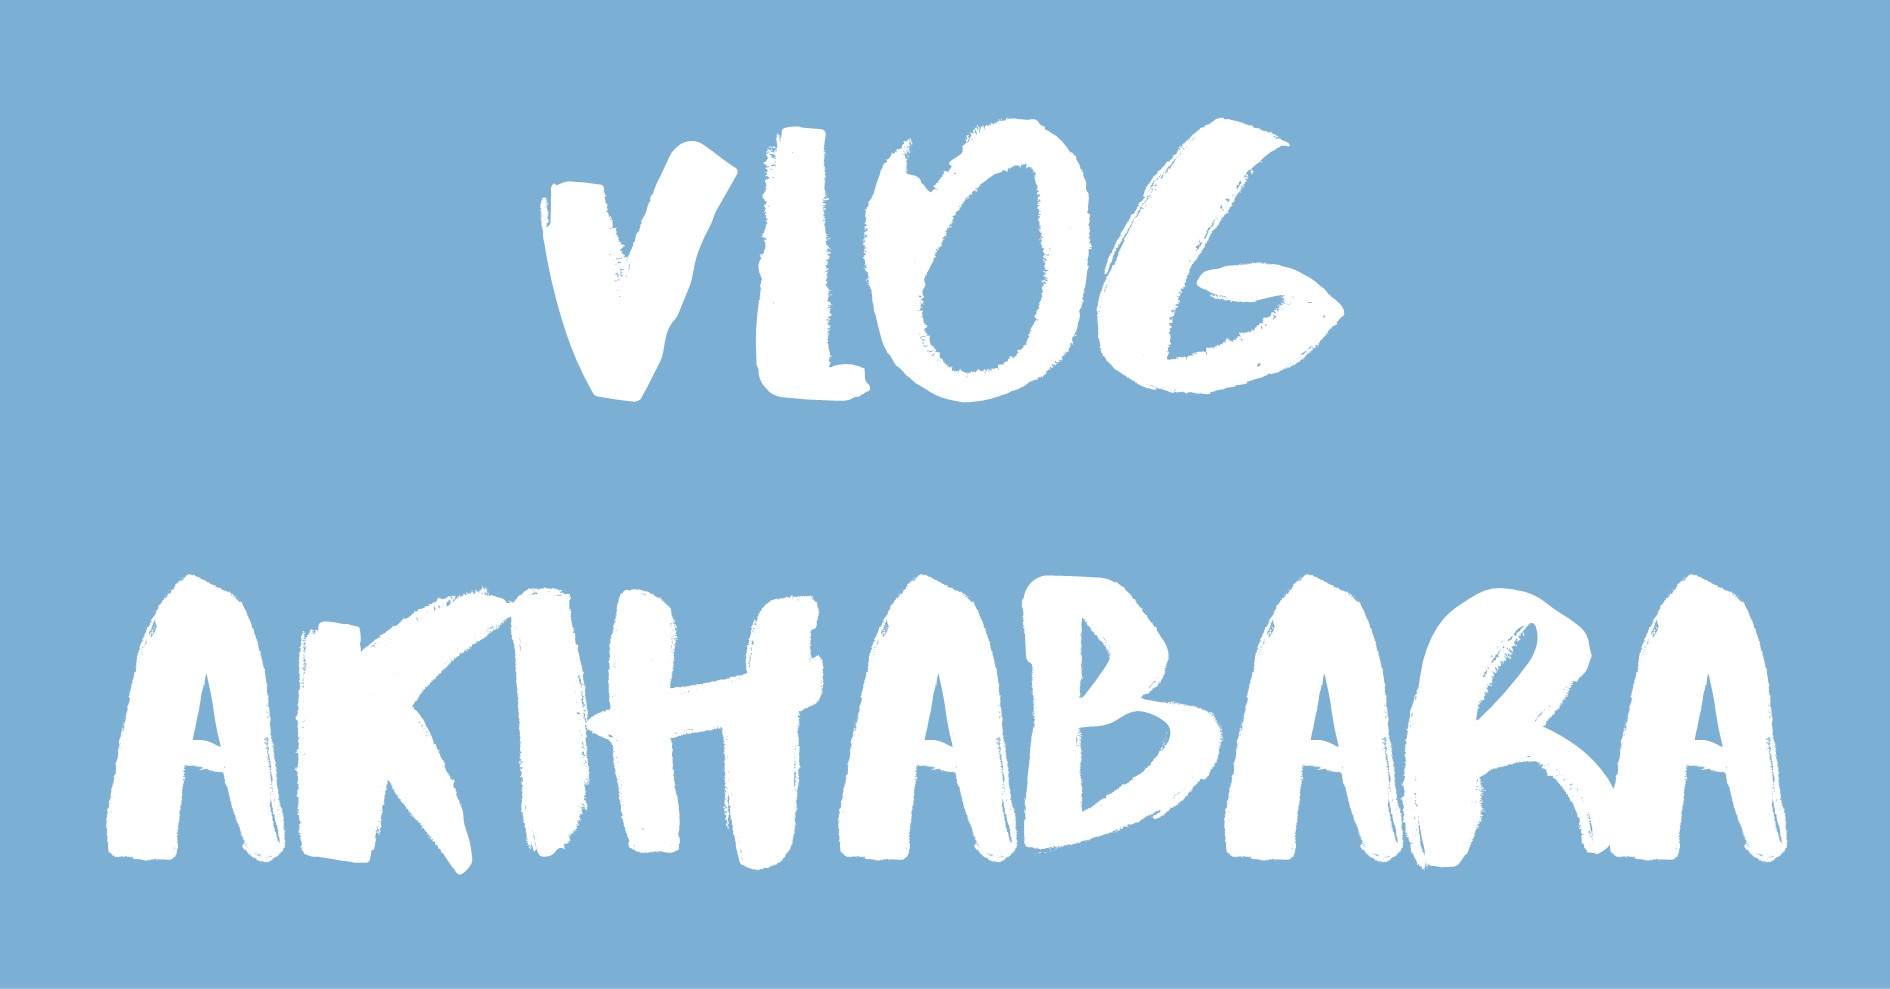 Vlog Akihabara